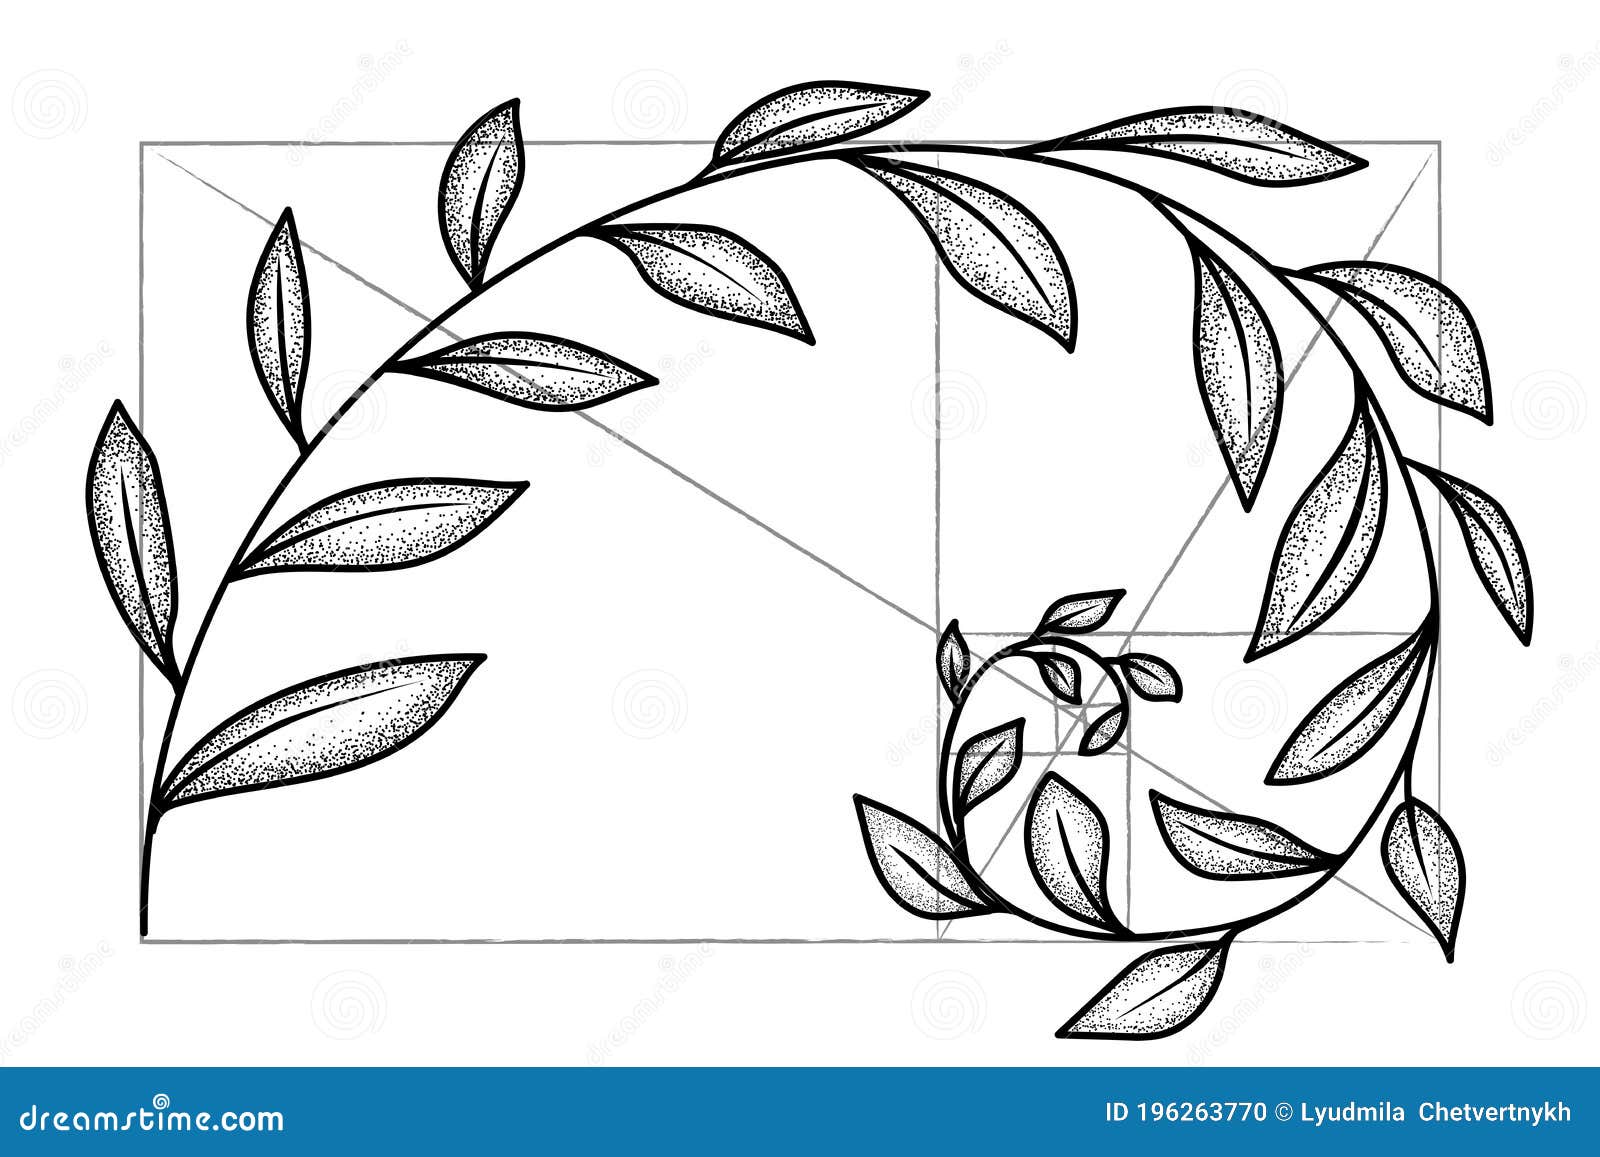 floral fibonacci spiral. sketch of  harmony concept, golden ratio.